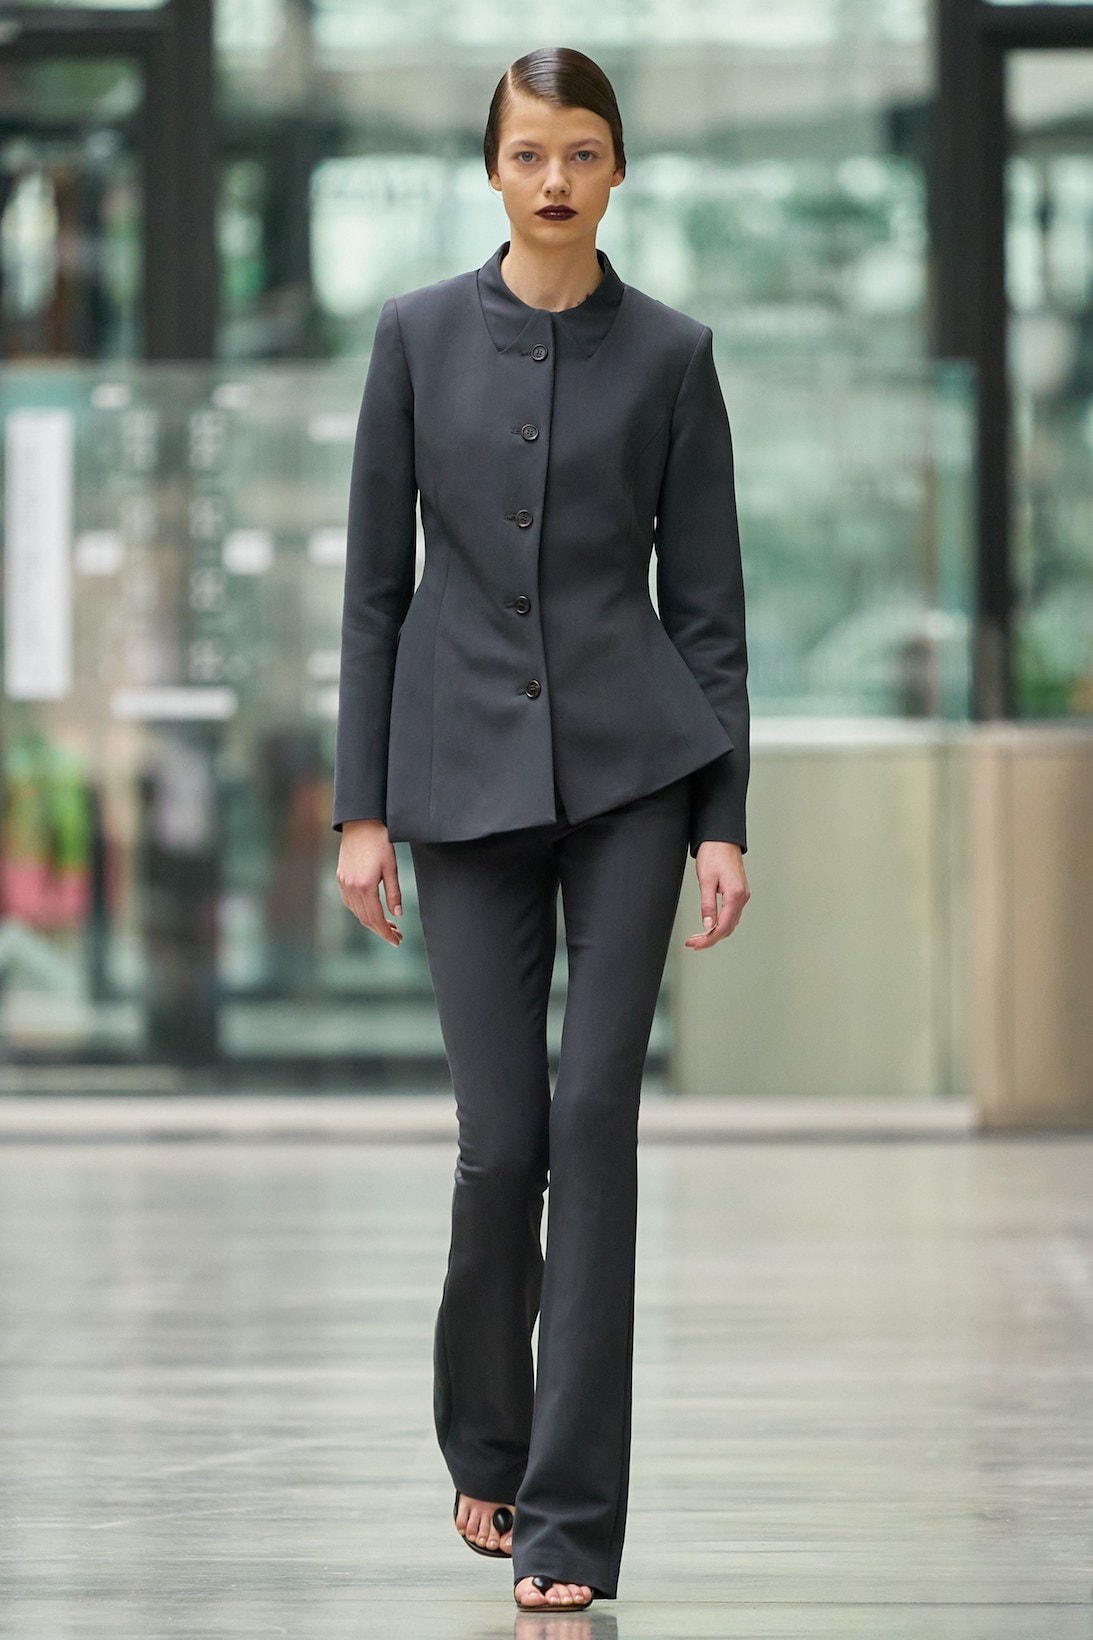 coperni sebastien meyer arnaud vaillant paris fashion week fall winter collection suit grey black